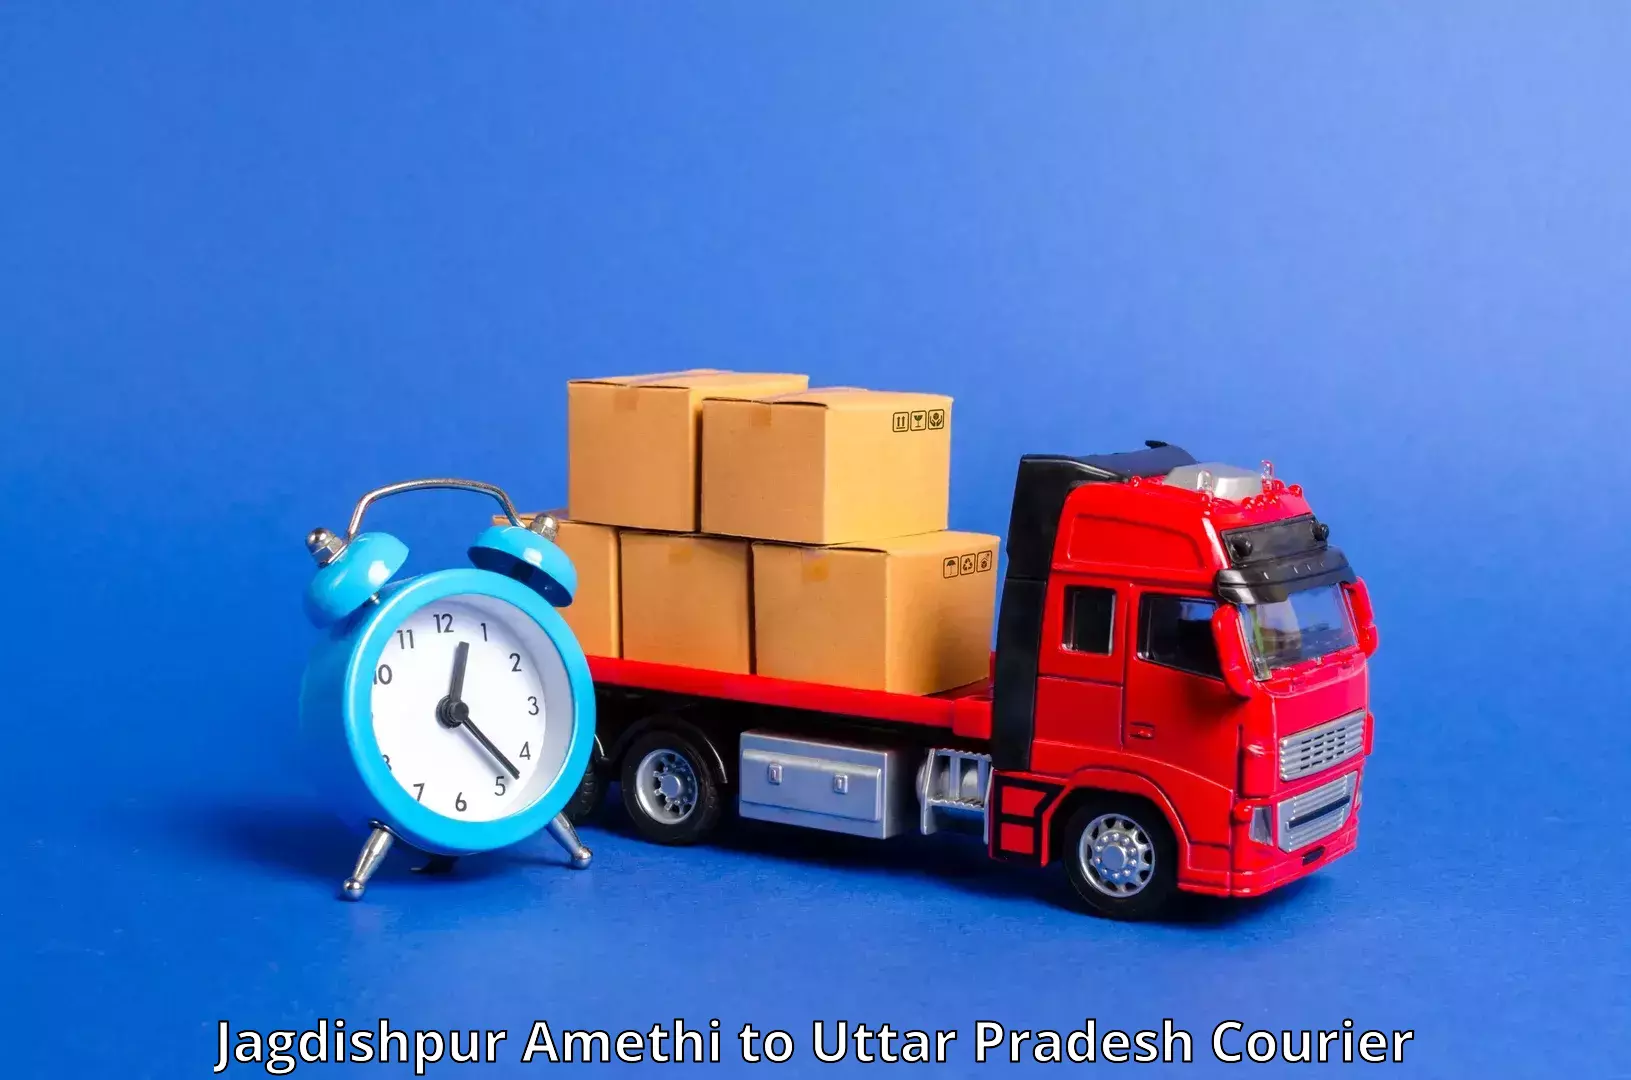 Global courier networks Jagdishpur Amethi to Kurebhar